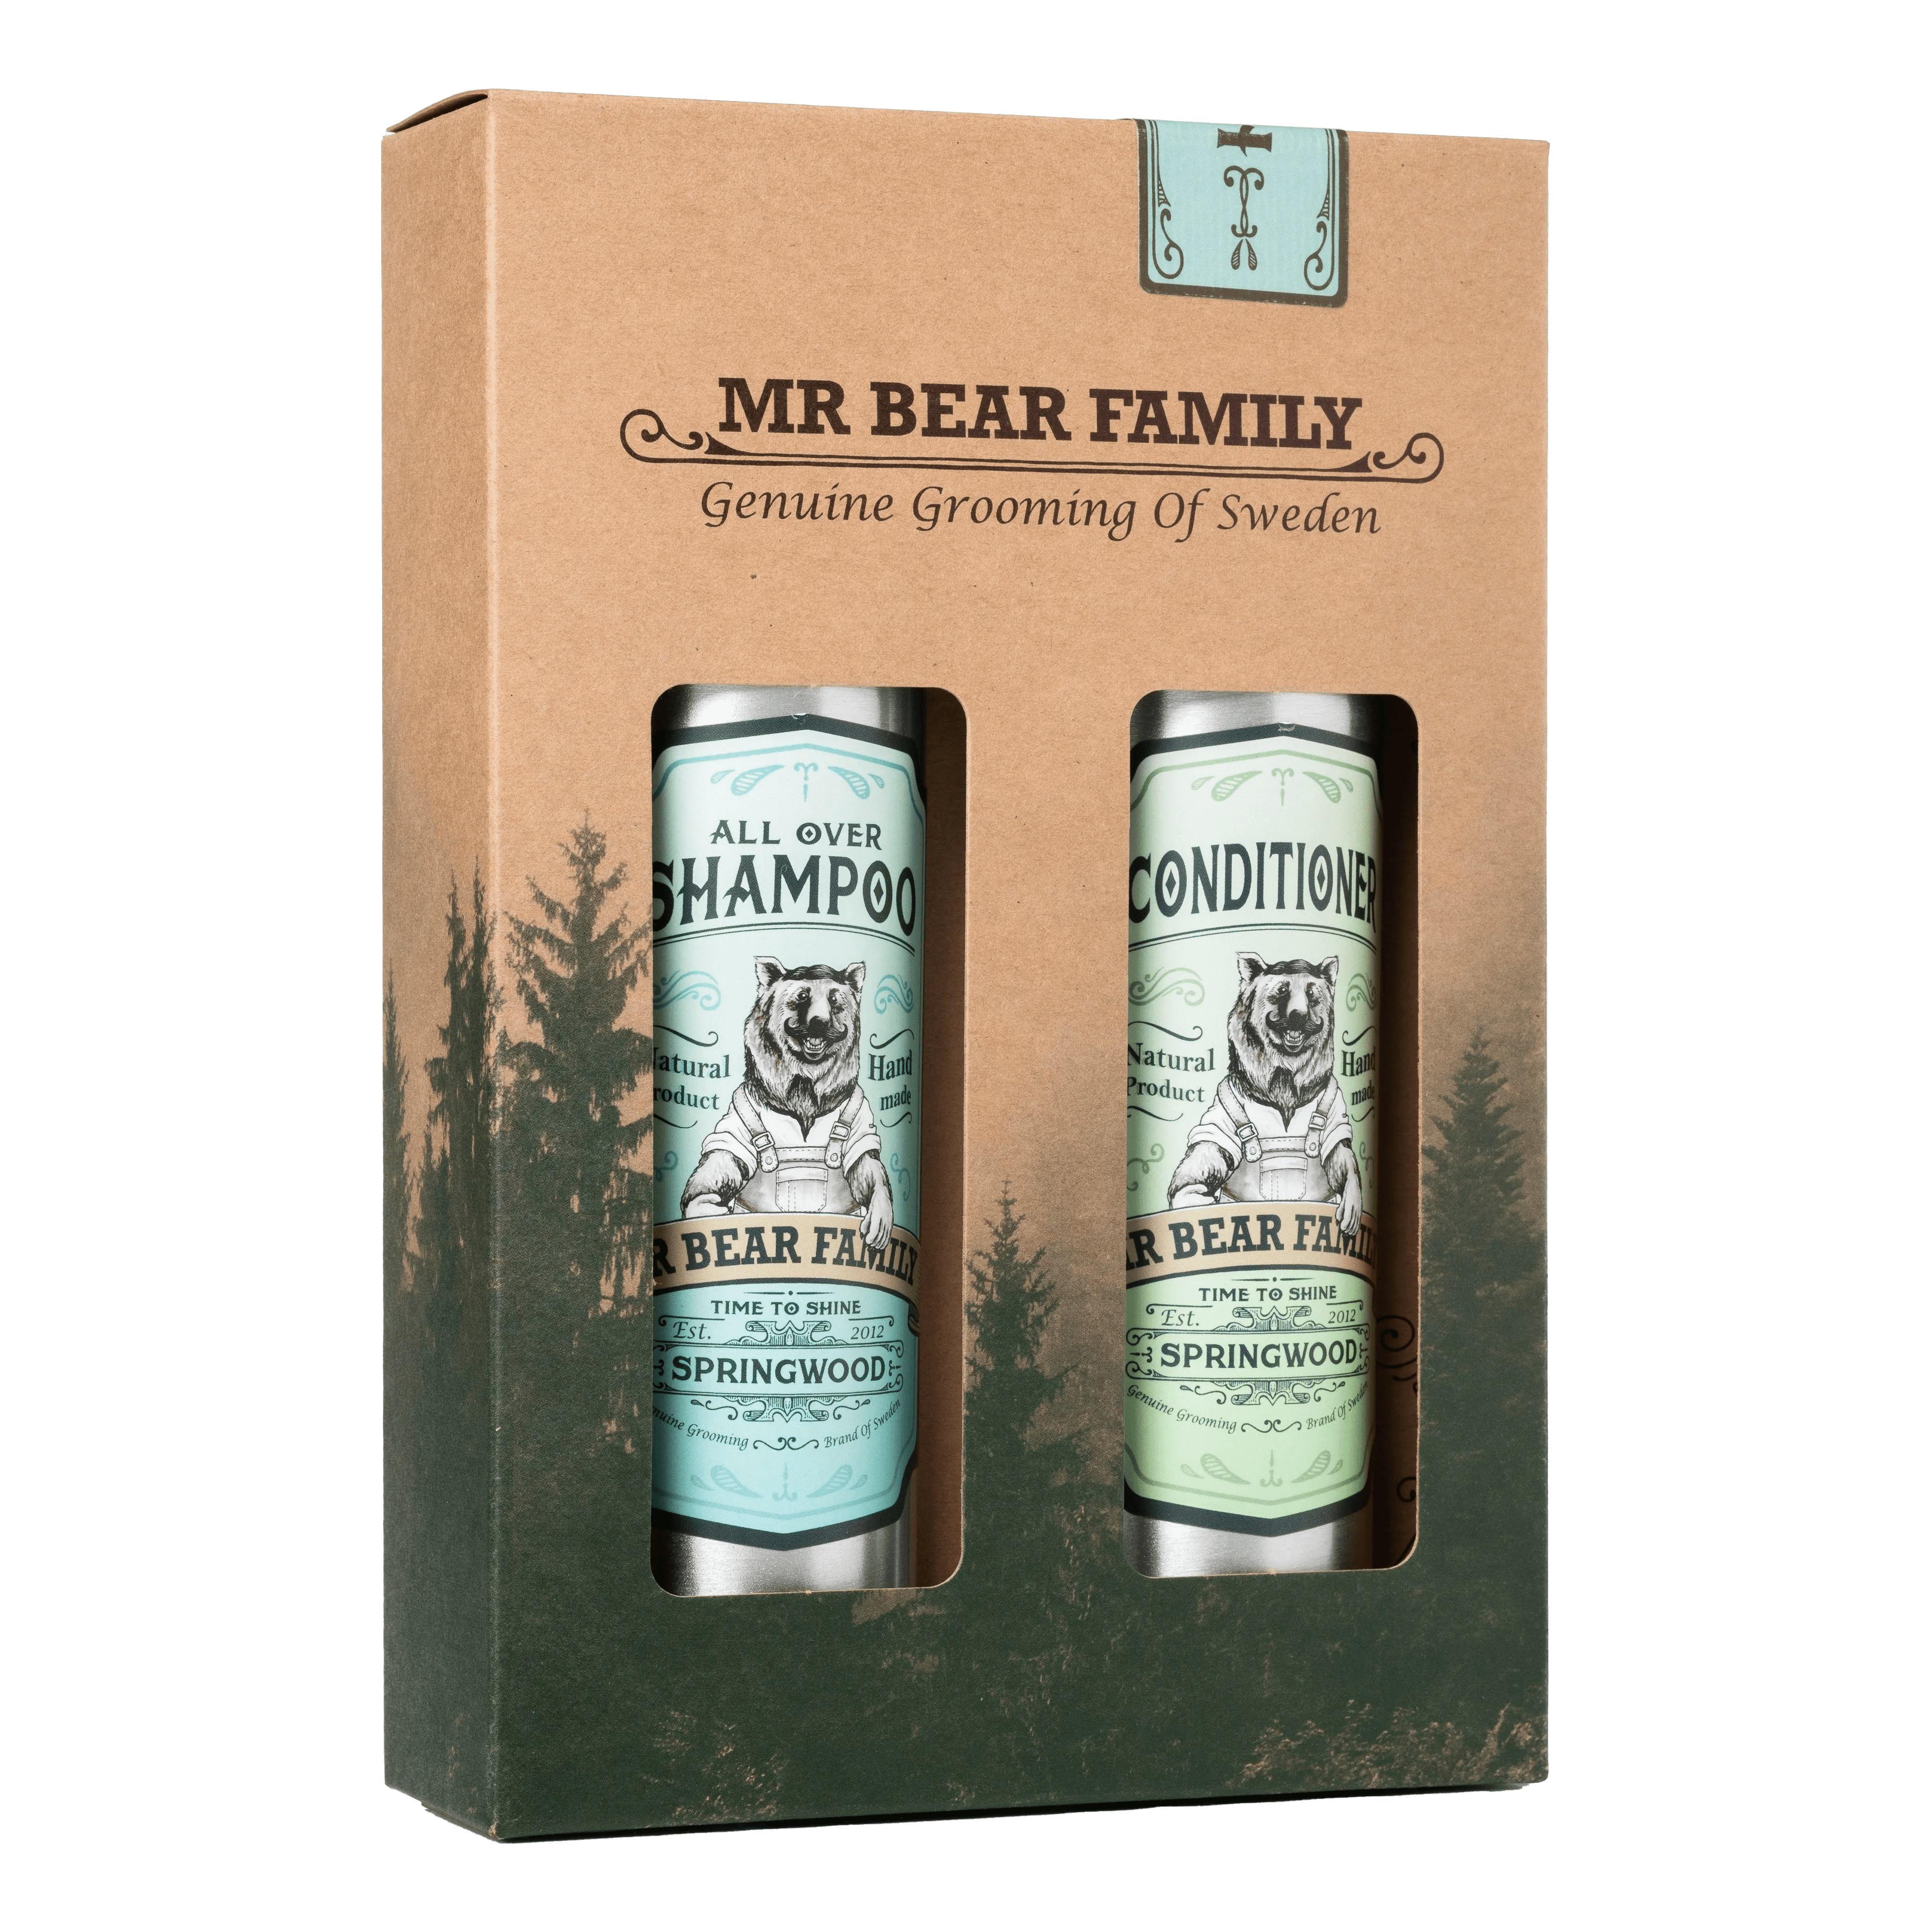 Mr Bear Family Sjampo & balsam hårkit